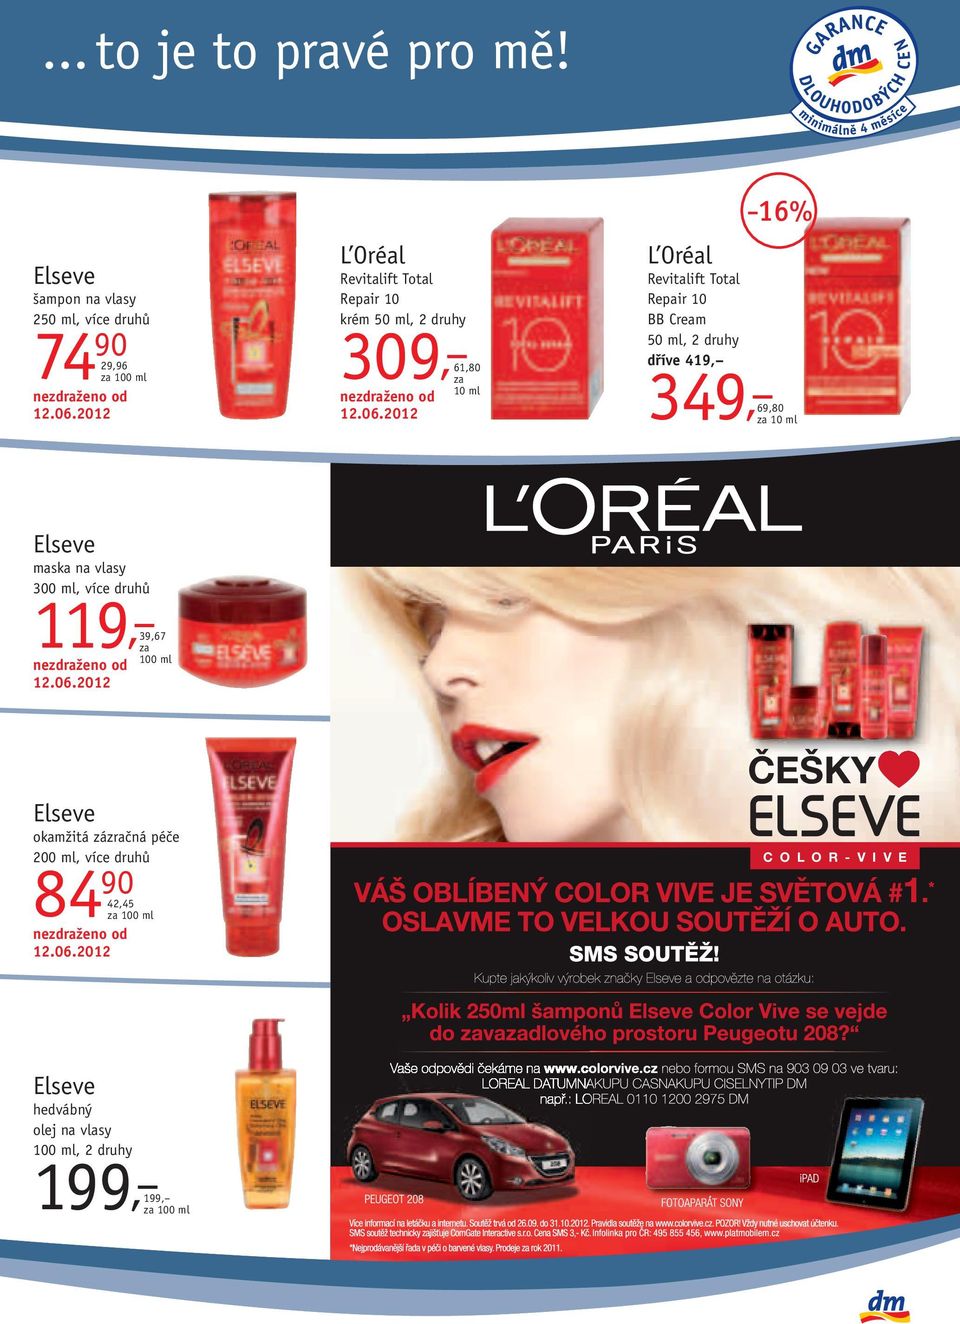 2012 16% L Oréal Revitalift Total Repair 10 BB Cream 50 ml, 2 druhy dříve 419, 349, 69,80 Elseve maska na vlasy 300 ml,